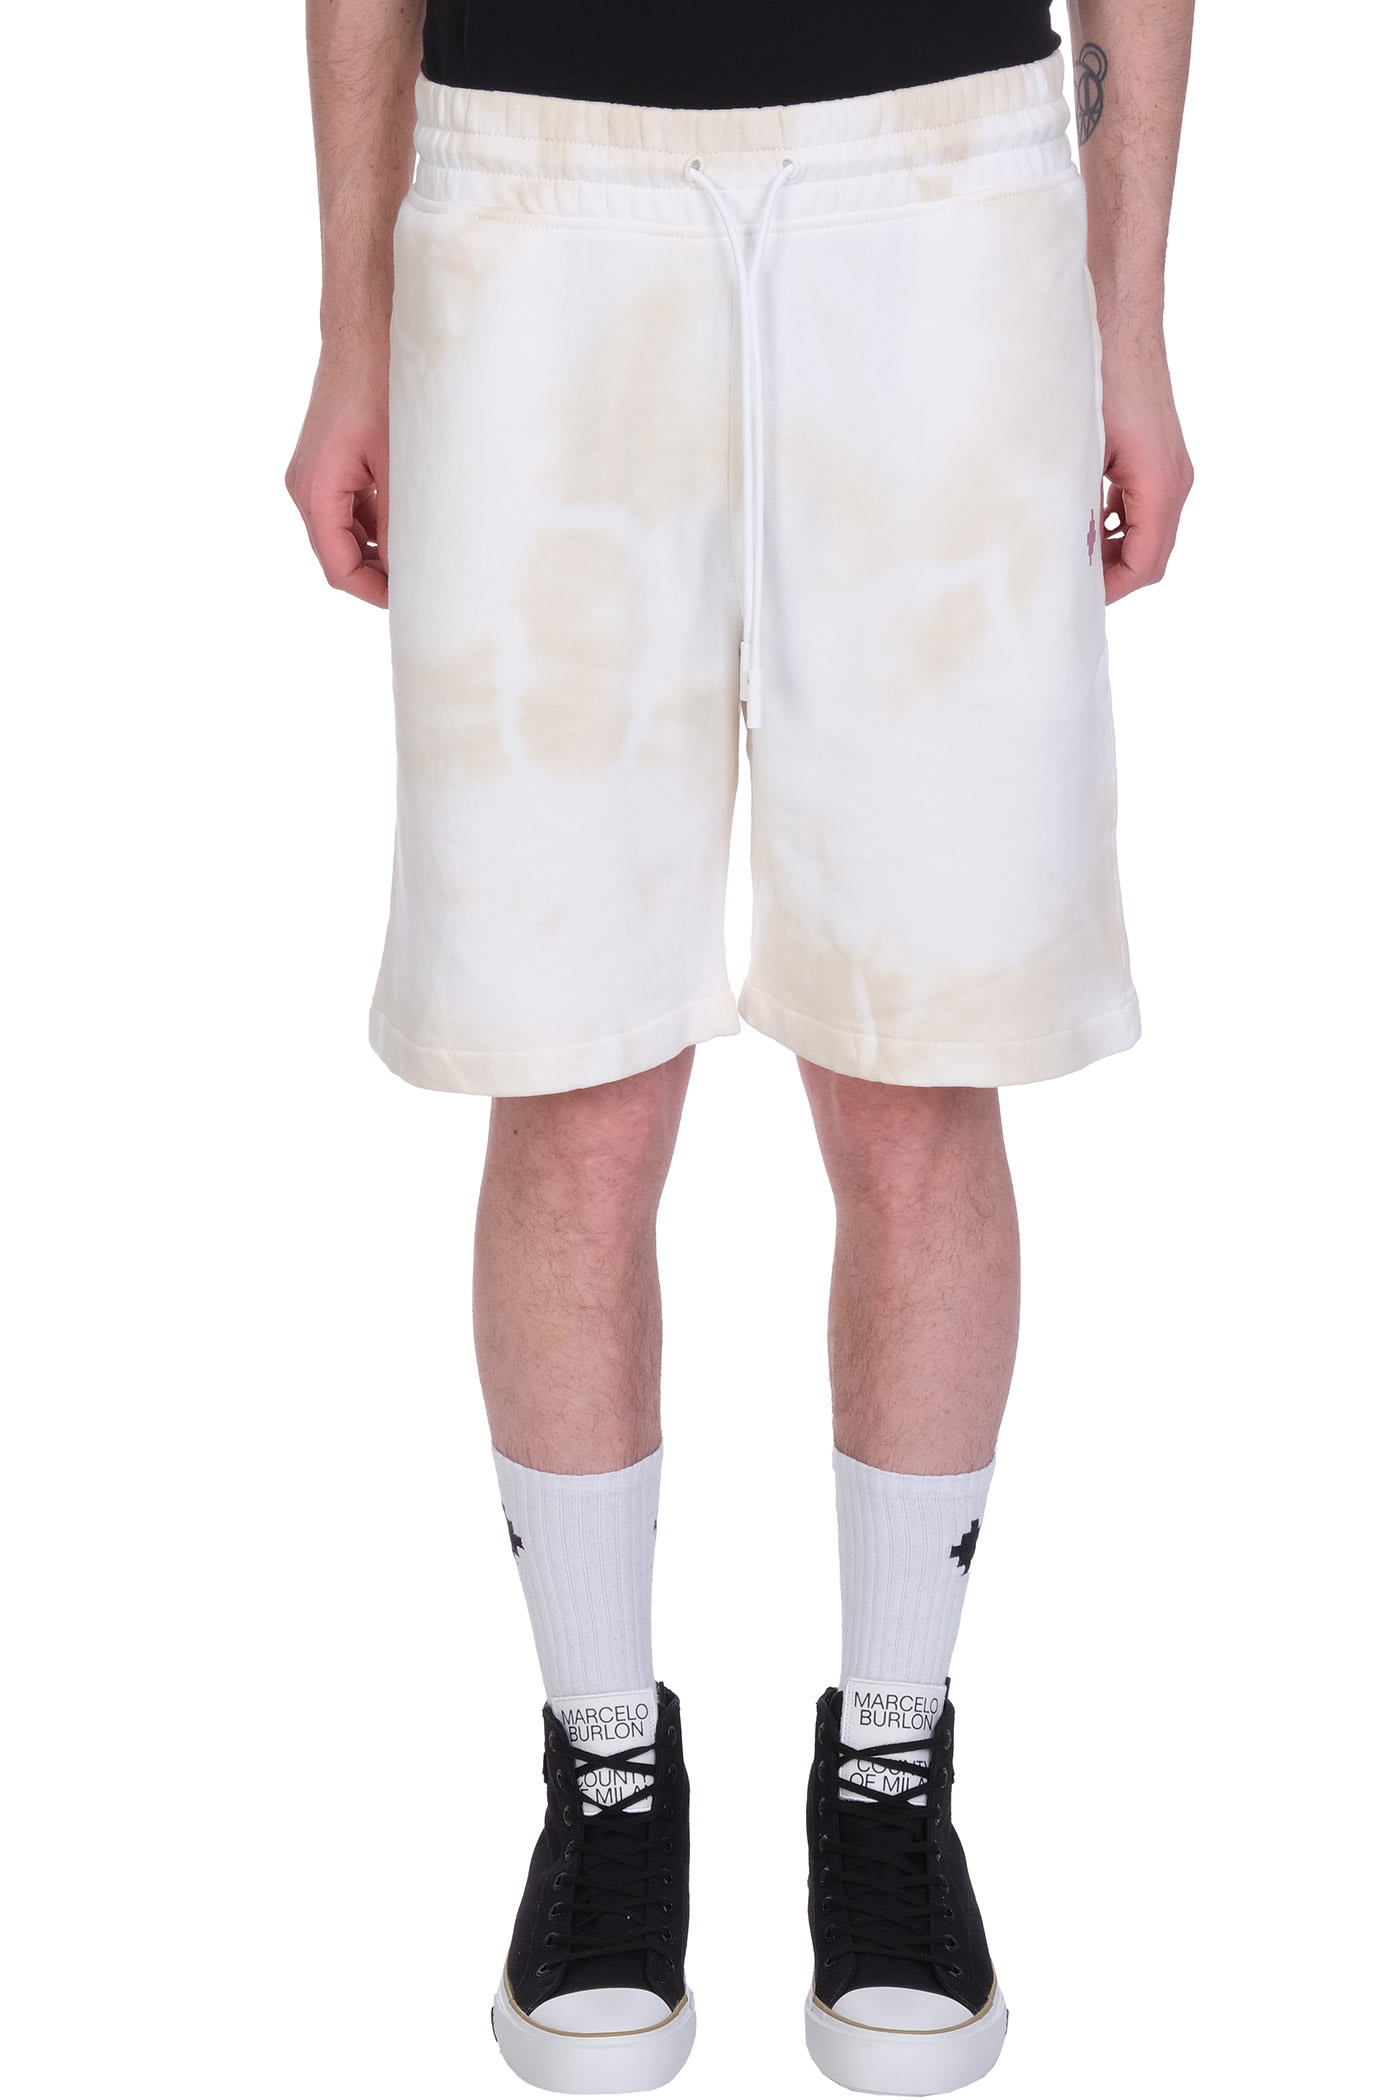 Marcelo Burlon Shorts In White Cotton